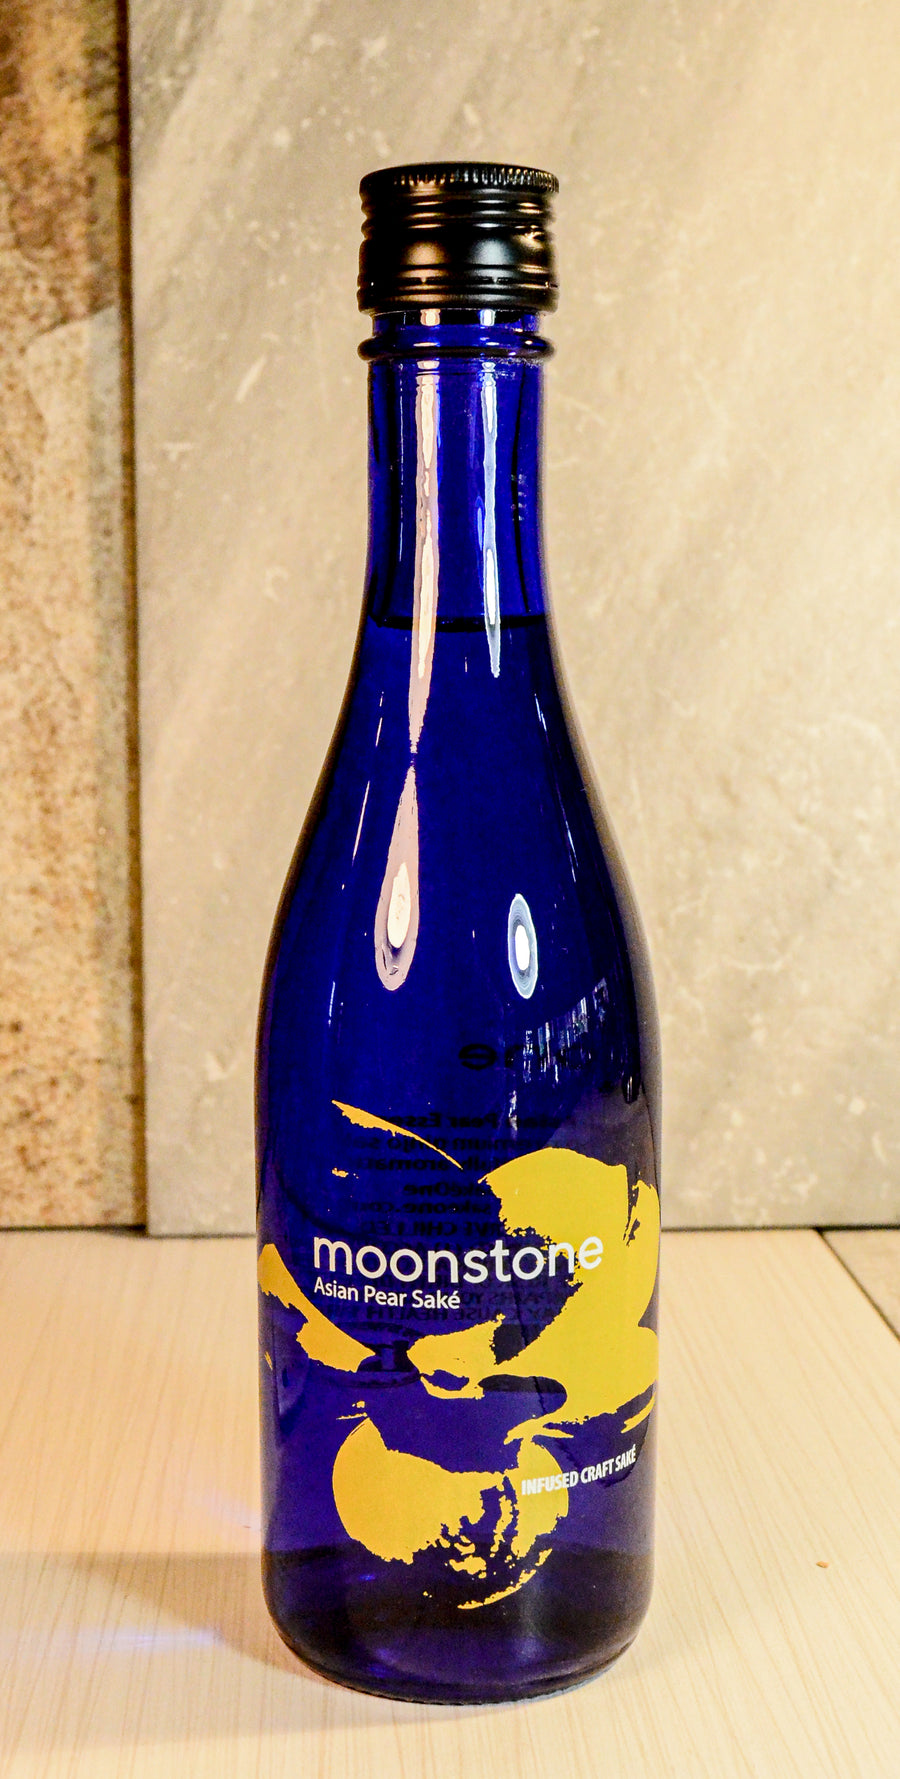 Moonstone, Asian Pear Sake